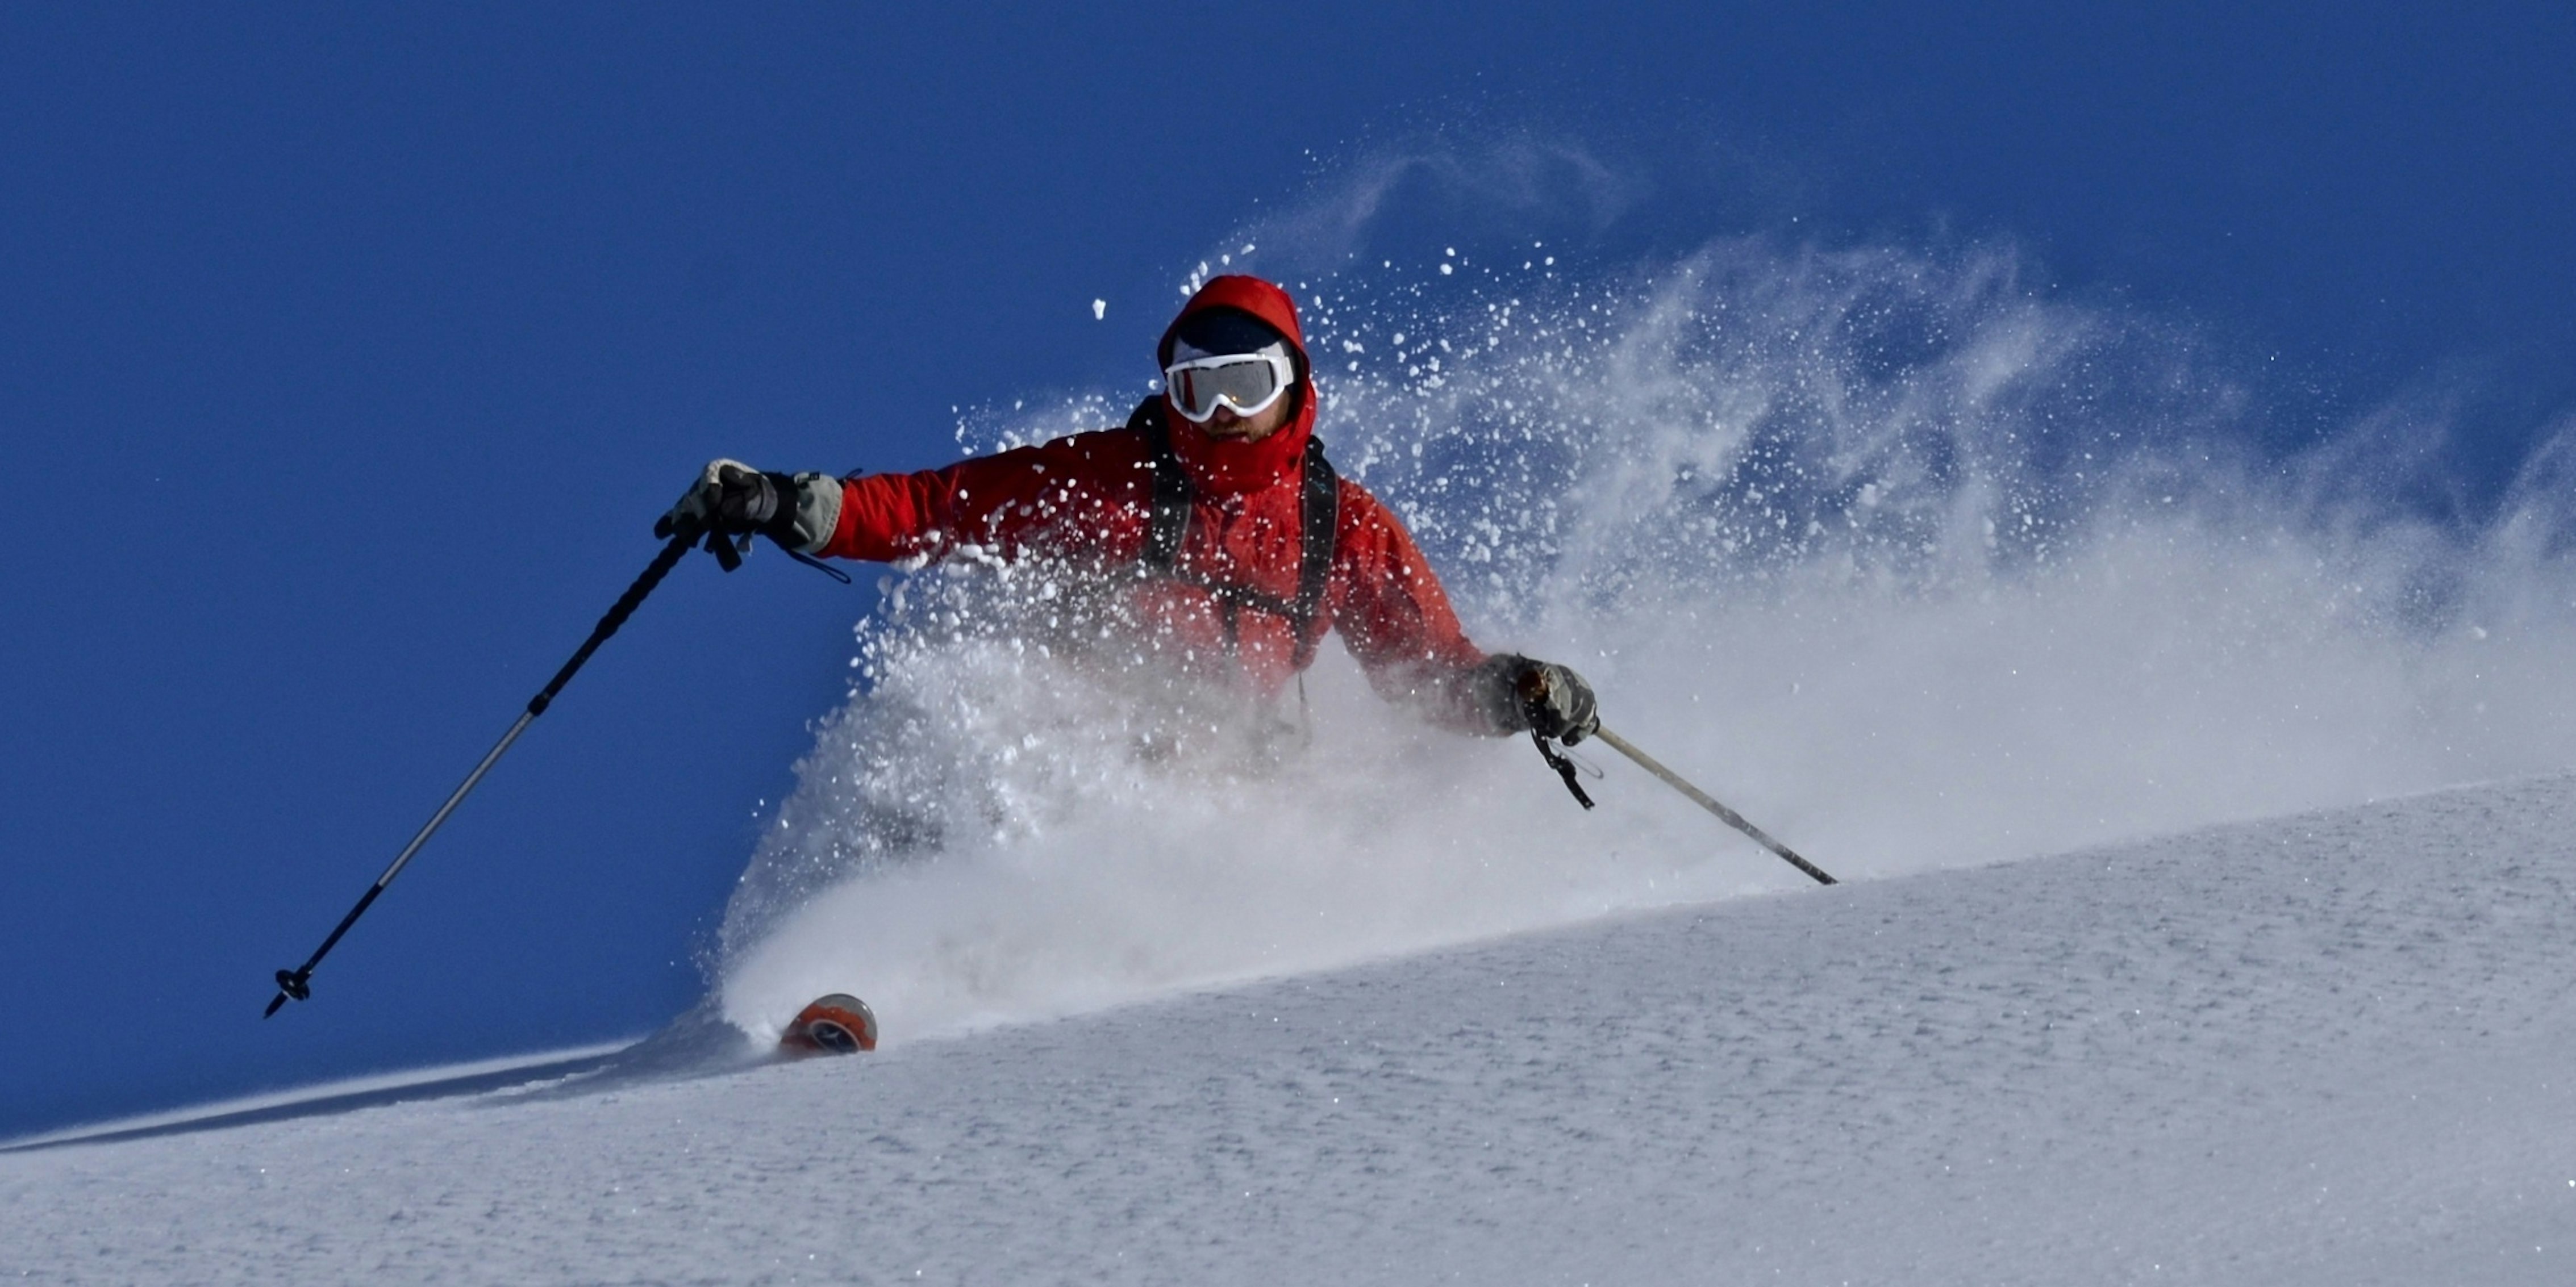 Cold лыжи. Play Skiing. Лыжный спорт журнал. Журнал лыжный спорт купить.